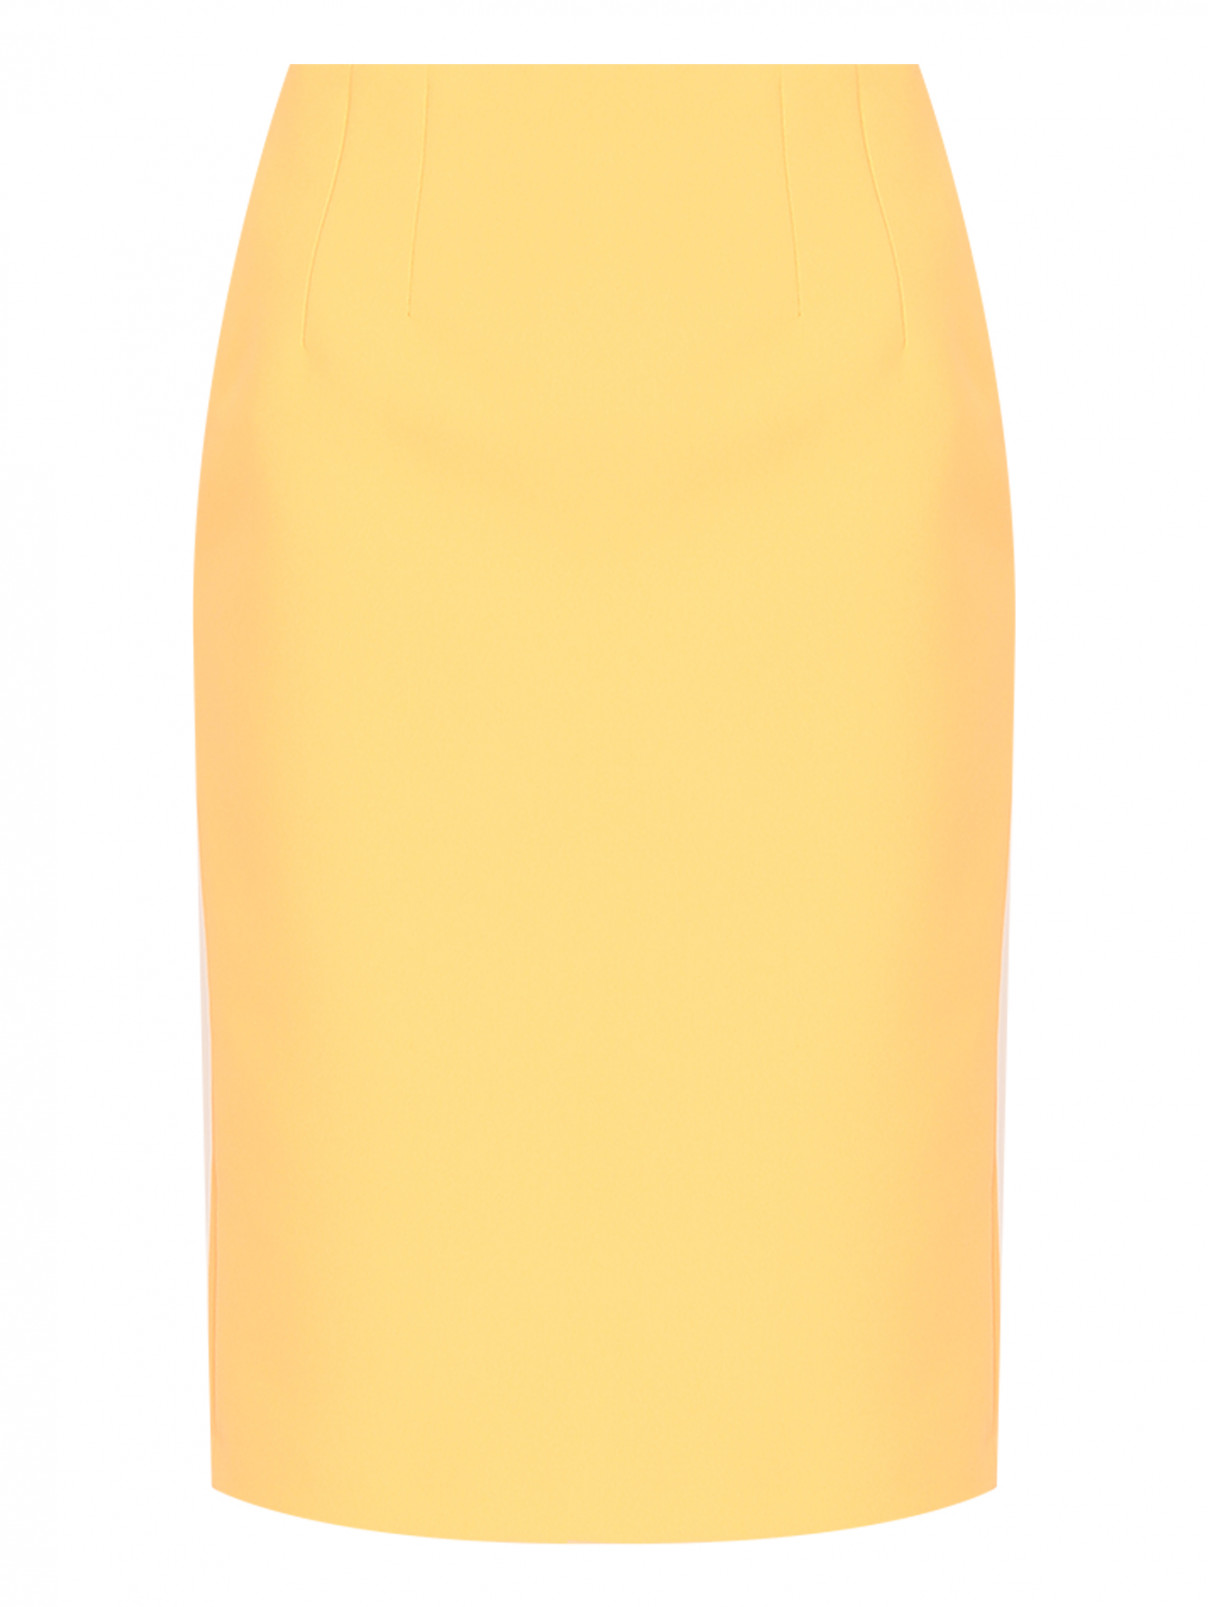 Юбка-карандаш на молнии Max&Co  –  Общий вид  – Цвет:  Оранжевый